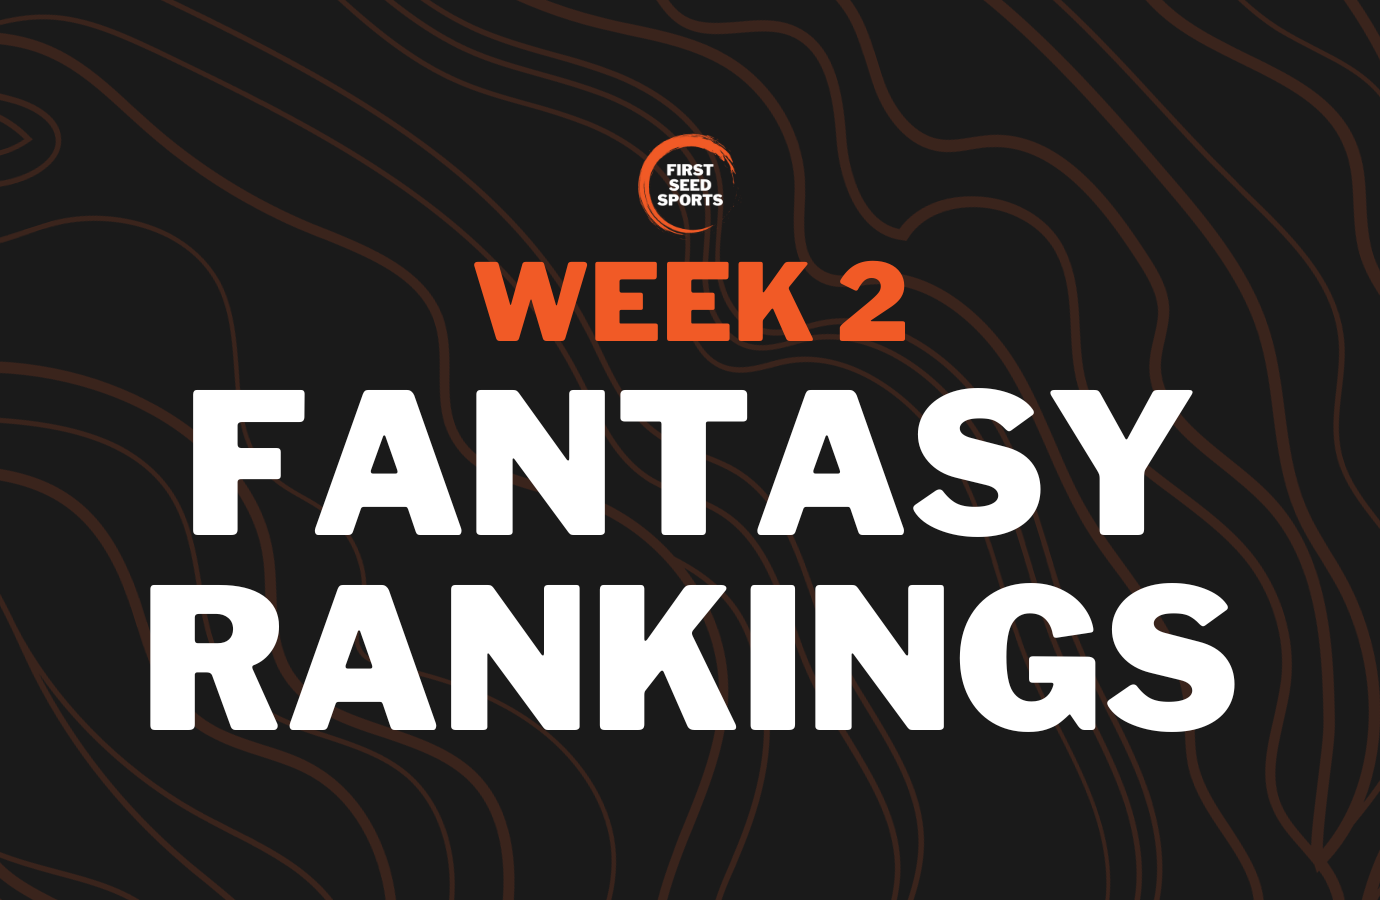 Week 2 Fantasy Football Rankings - First Seed Sports